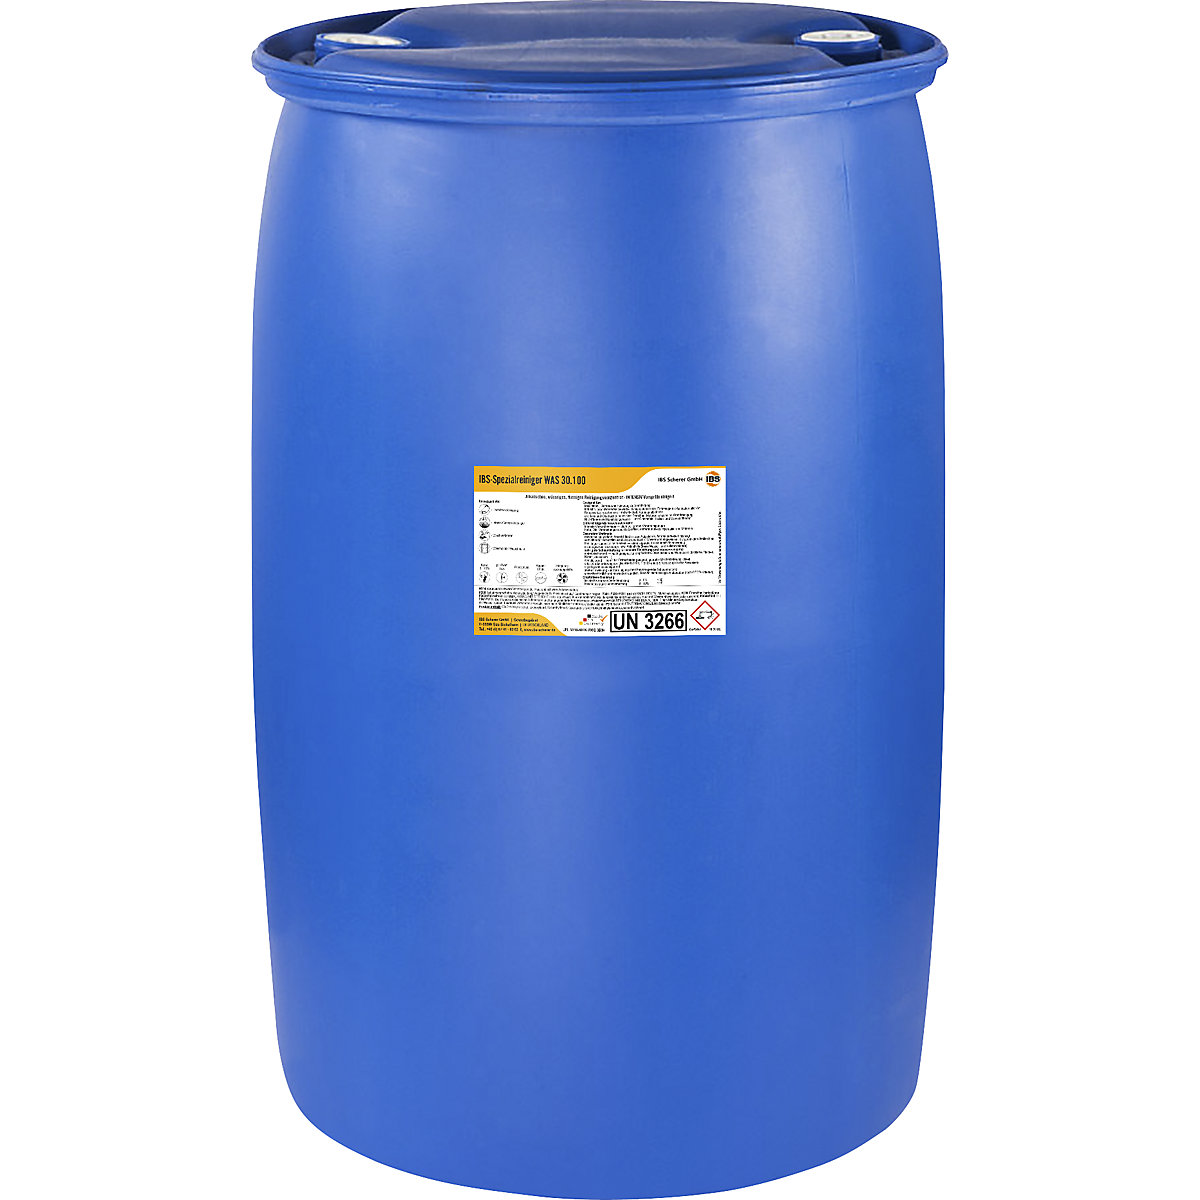 Visokotlačni čistač / sredstvo za prethodno prskanje WAS 30.100 – IBS Scherer, pH vrijednost 13,5, volumen 200 l-6